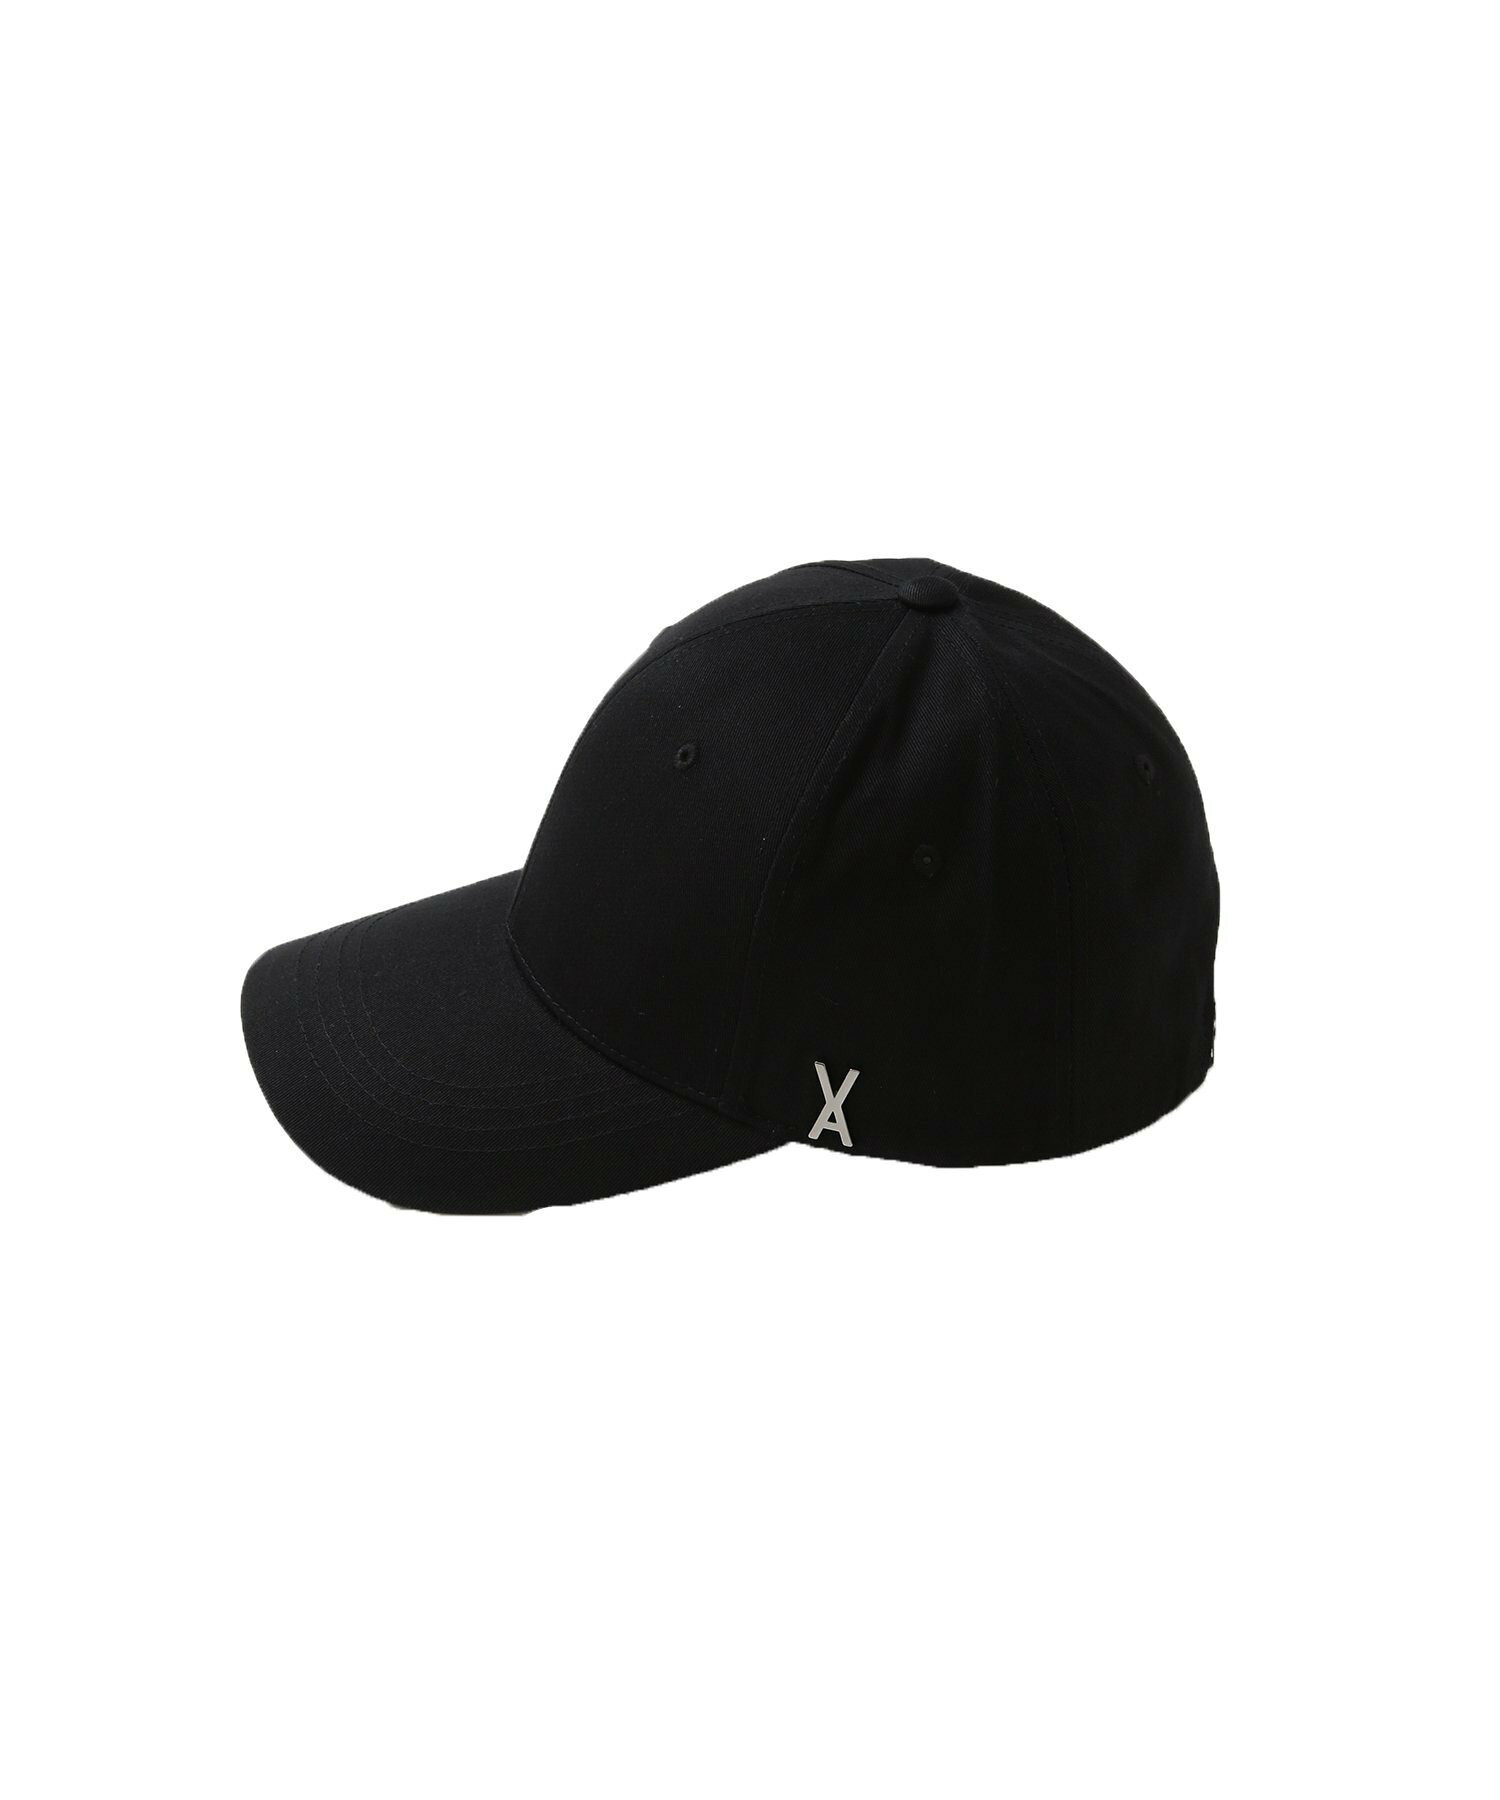 【 VARZAR / バザール 】Stud logo over fit ball cap